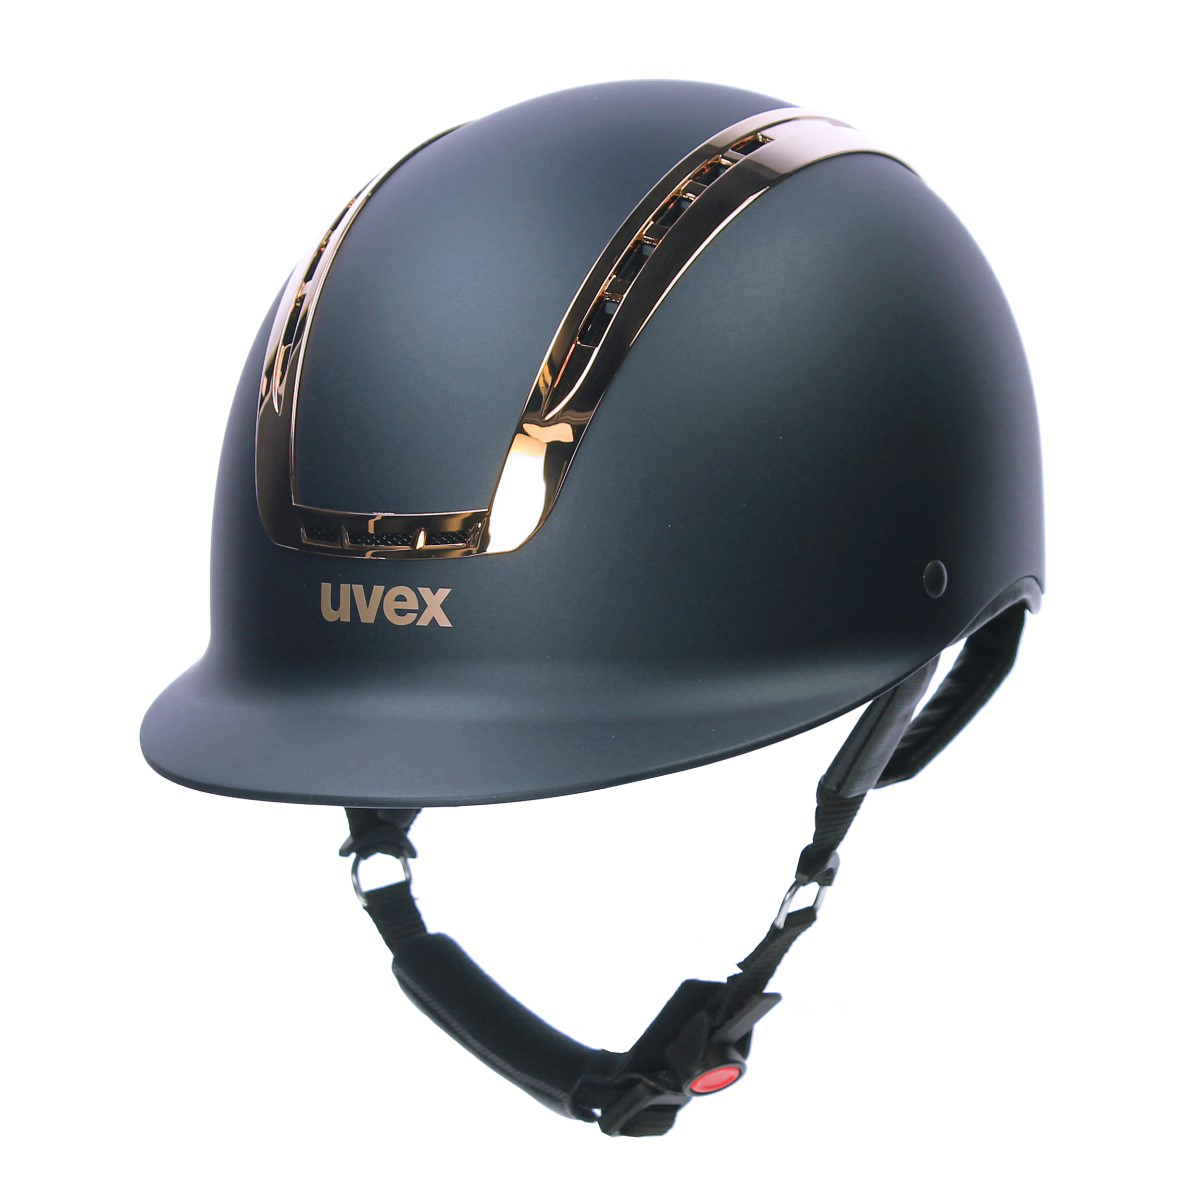 Uvex Suxxeed Chrome Riding Helmet 